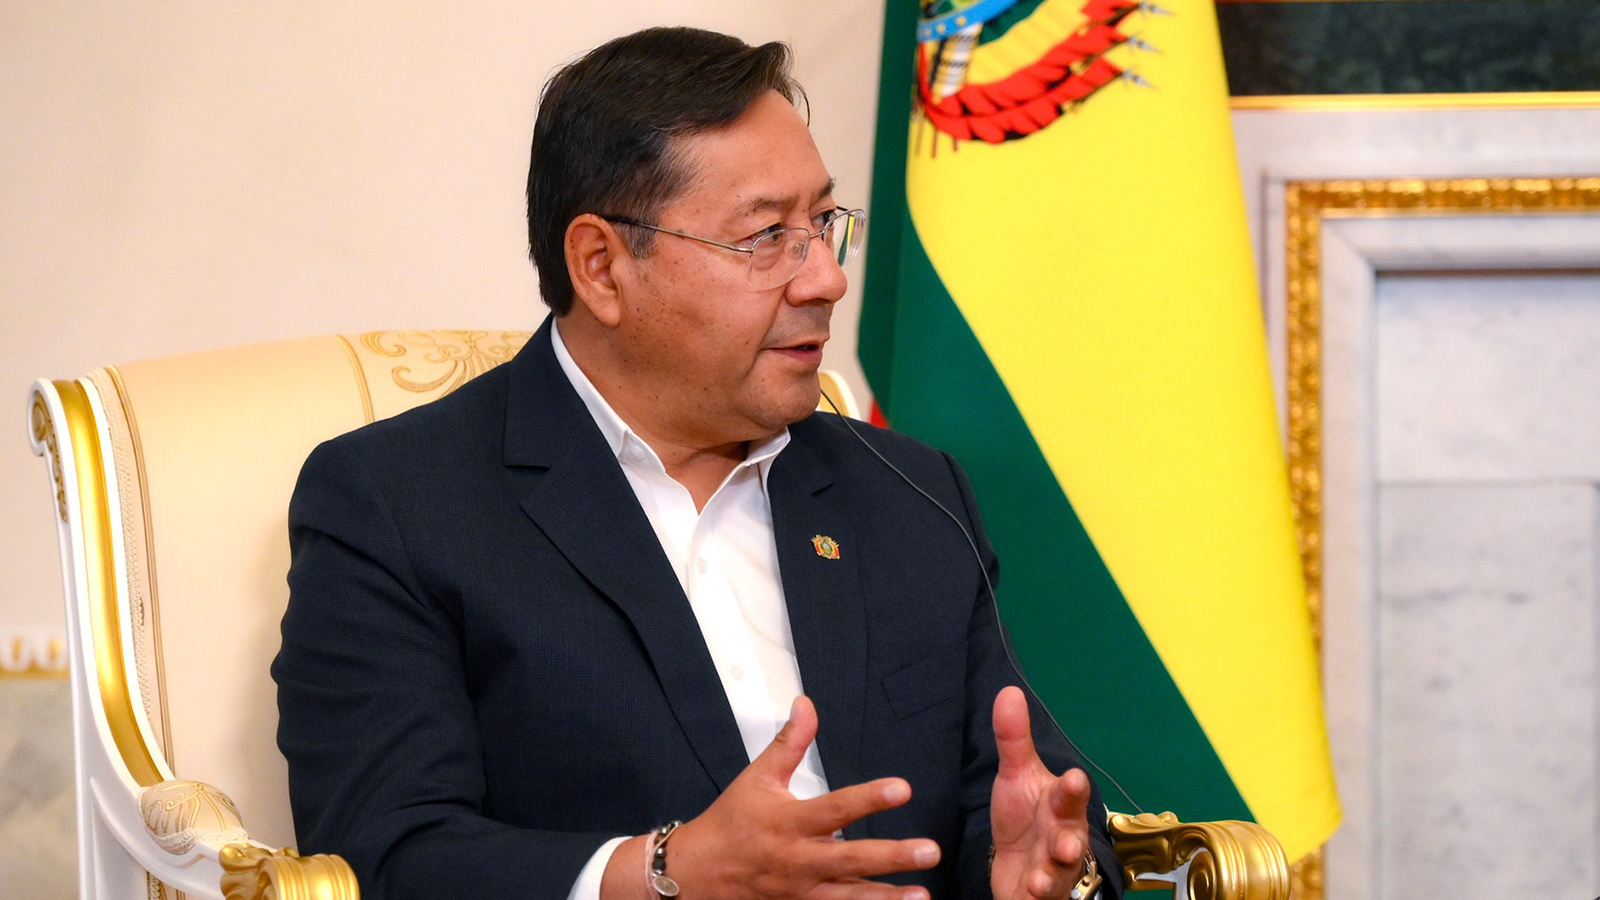 El presidente de Bolivia, Luis Arce. FOTO: Alexei Danichev, RIA Novosti